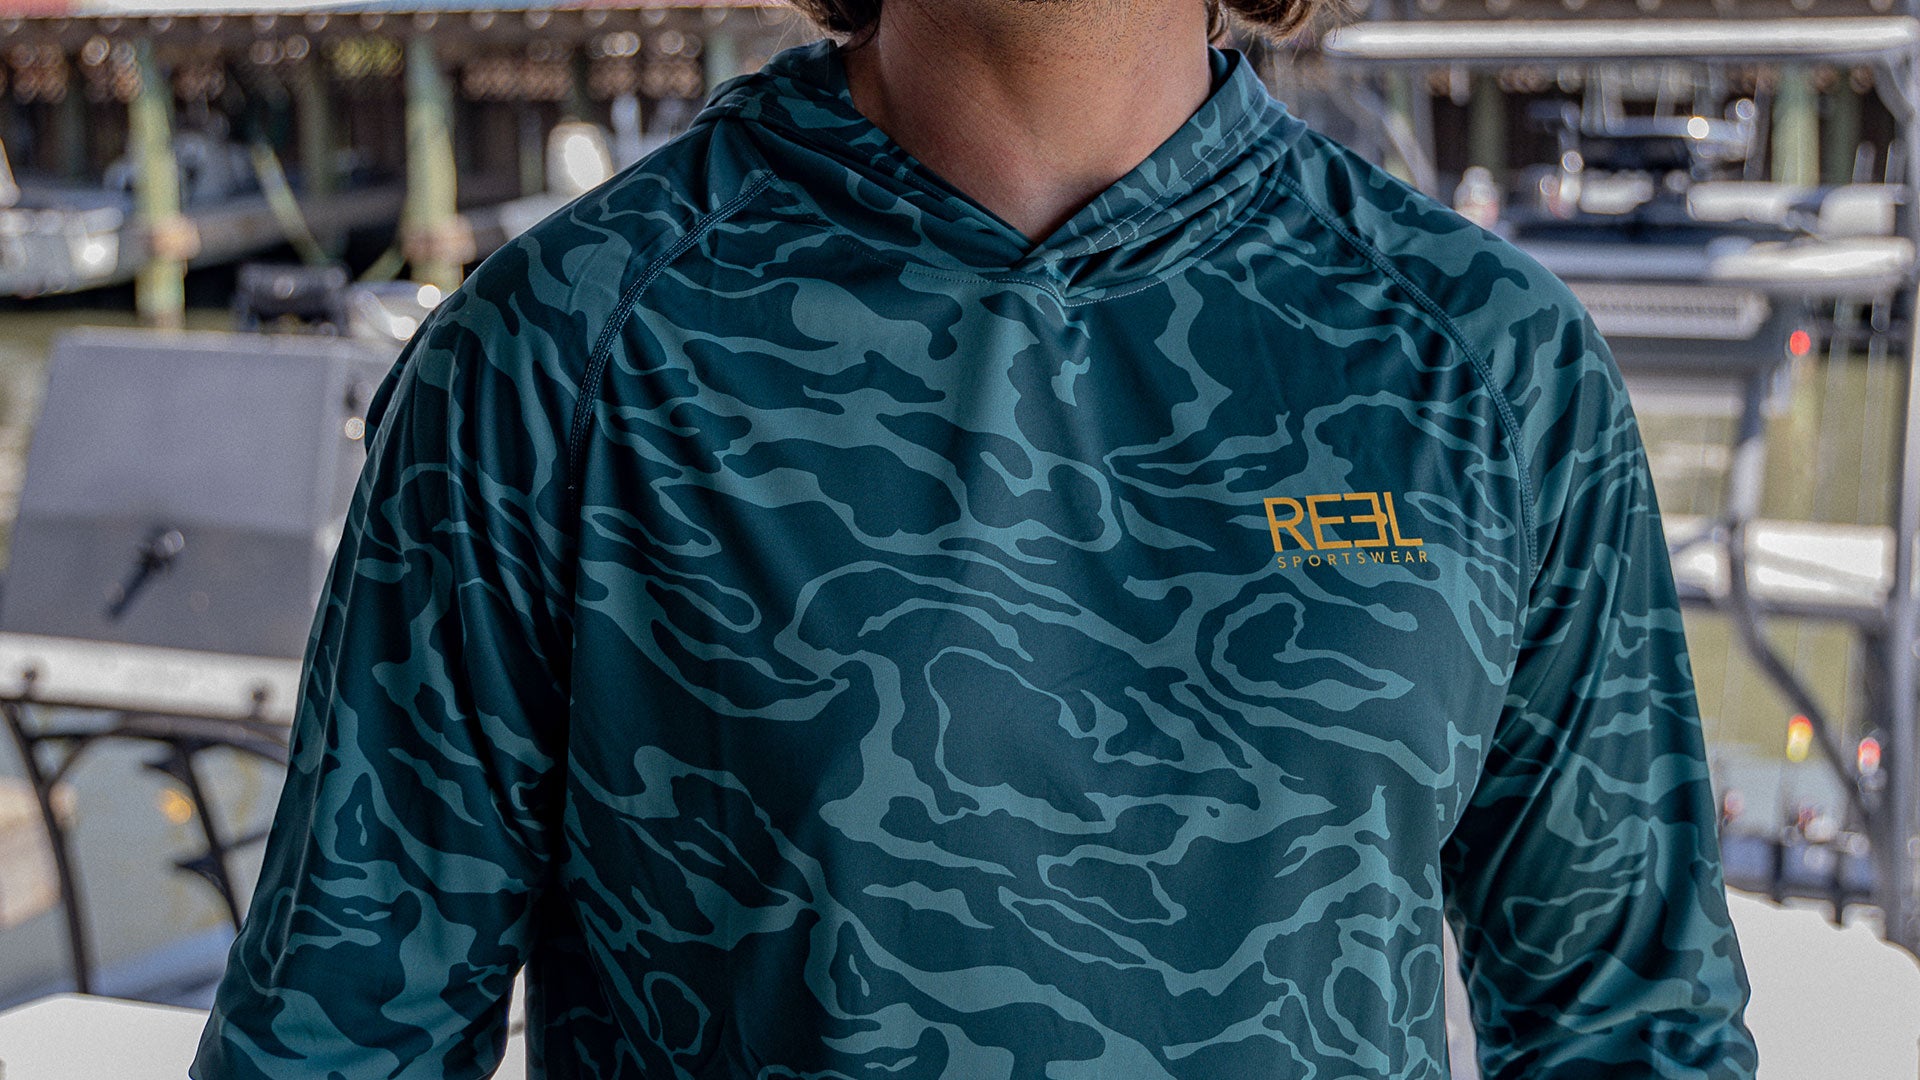 Reel Sportswear Men's fishing tops & shirts